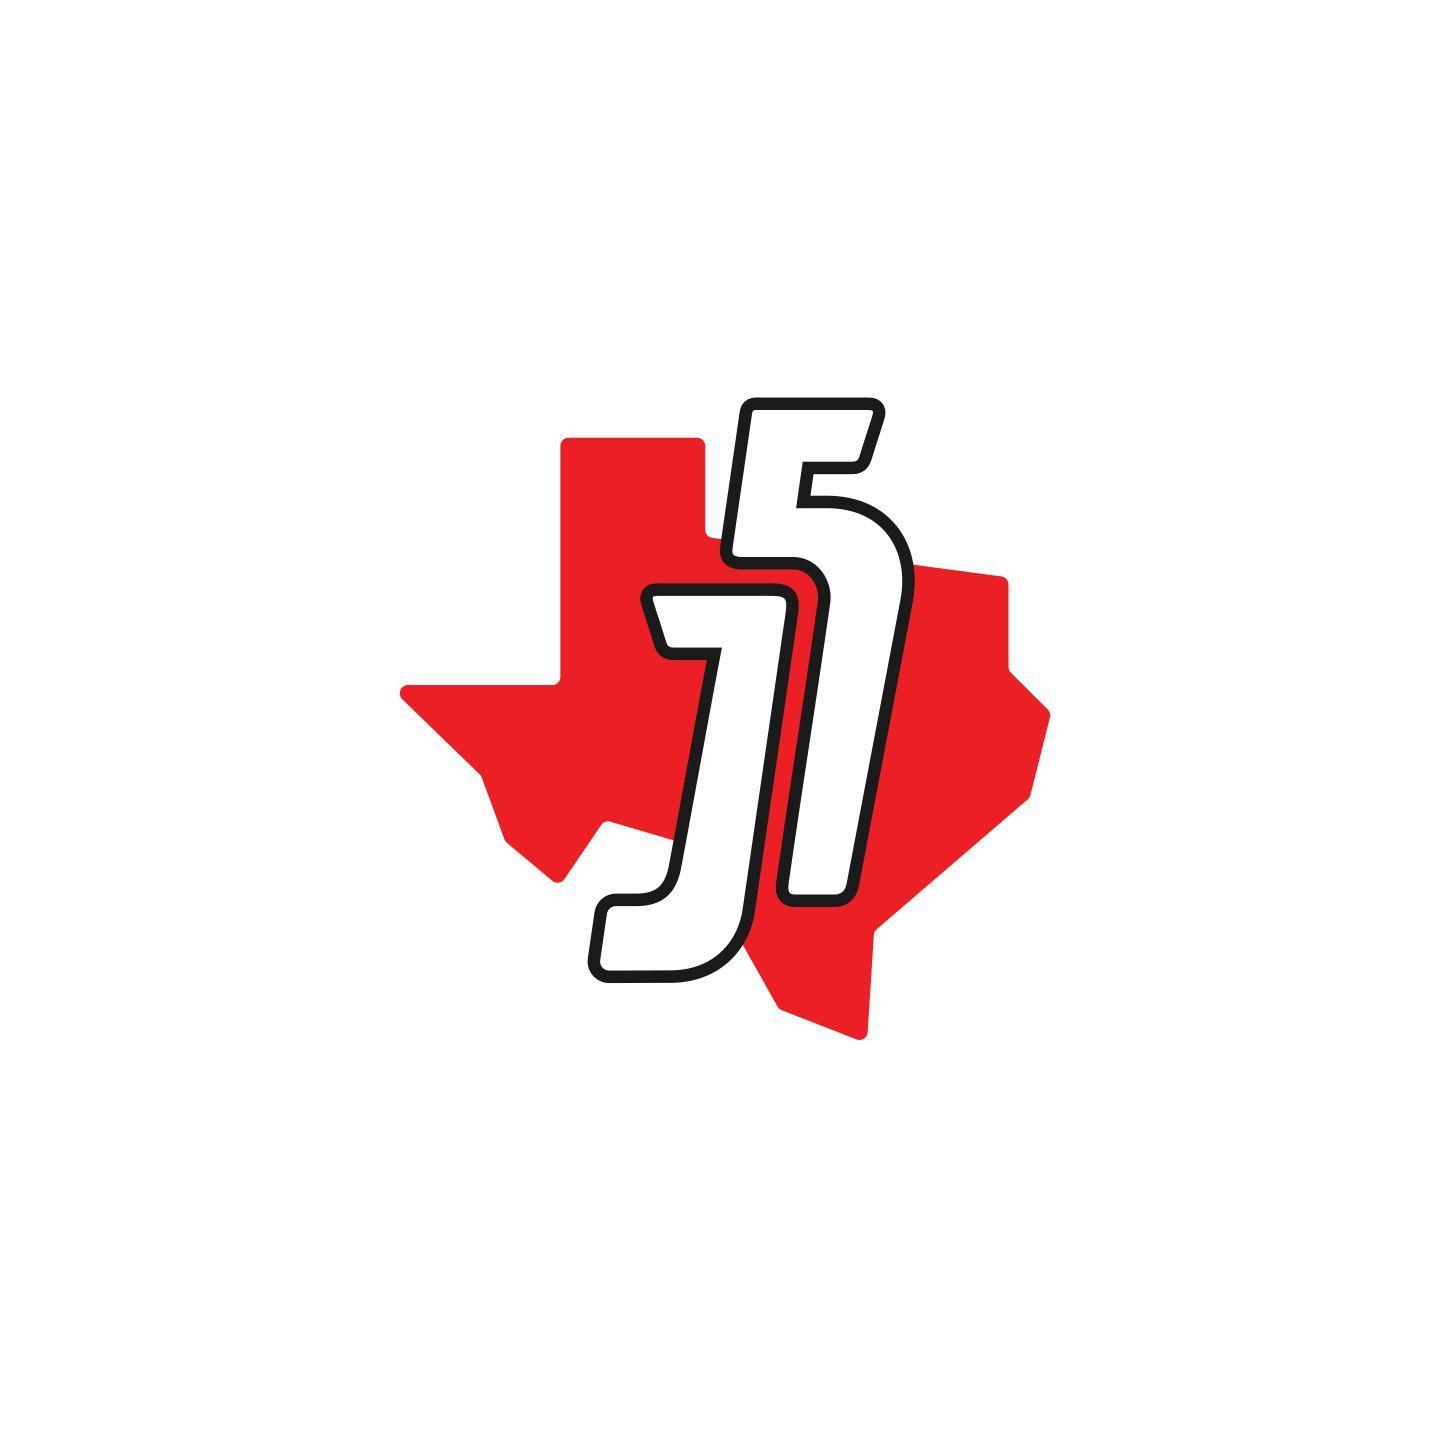 J5 Logo - Bold, Professional, Farm Equipment Logo Design for J5 by wiktor.ares